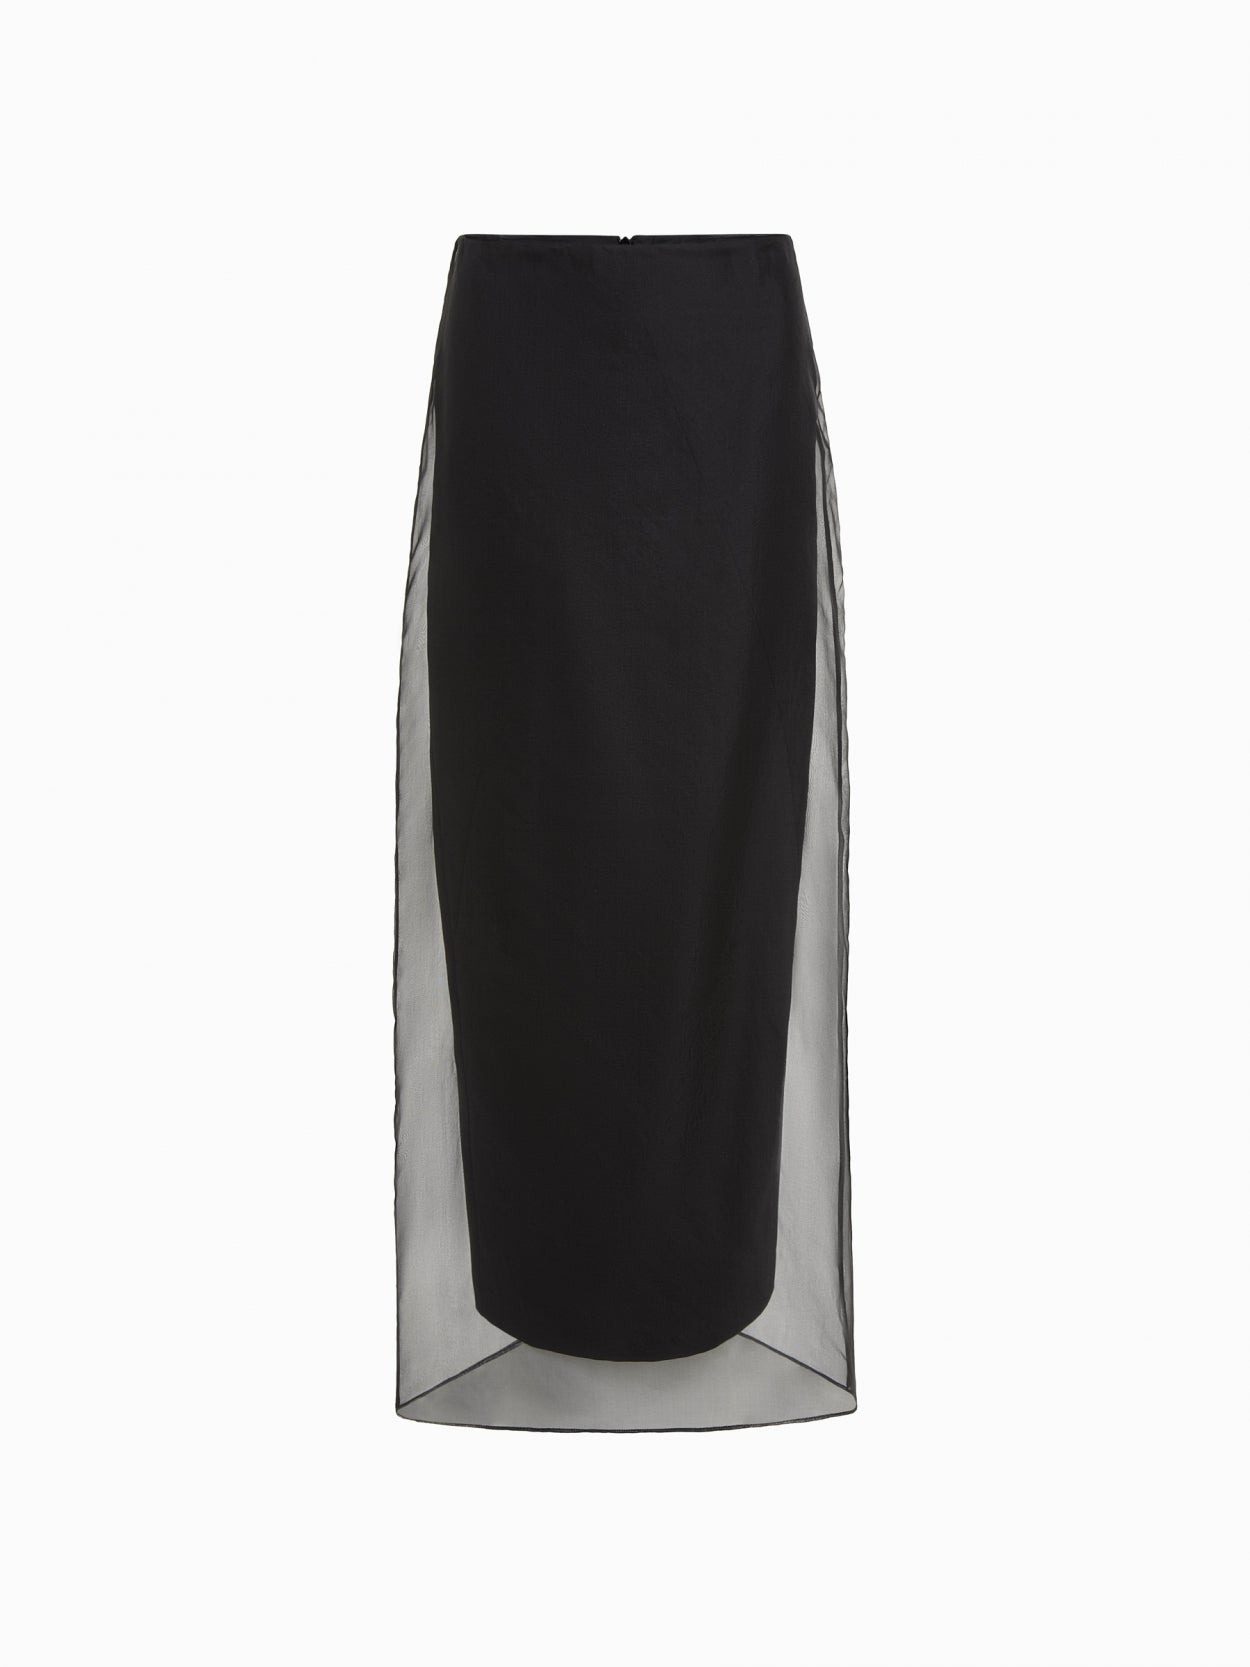 front packshot of a black long skirt with veil